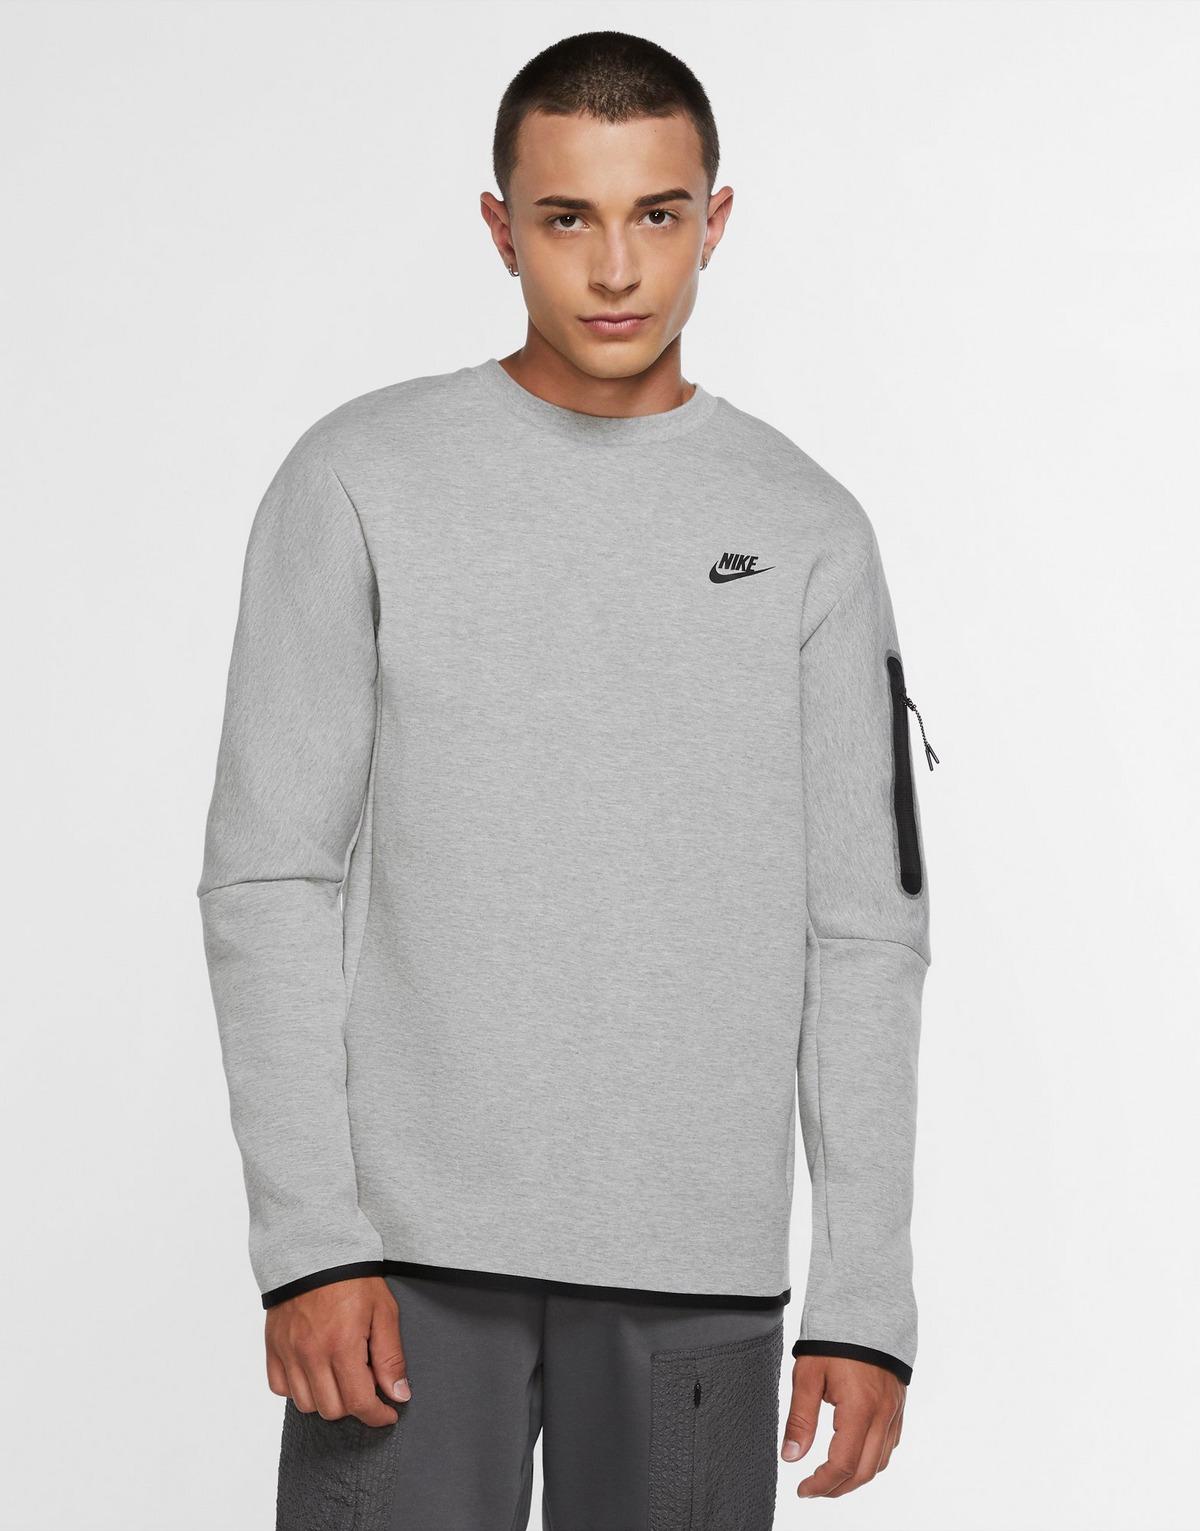 Nike Fleece Tech Crew Sweatshirt in Dark Grey Heather/Black/Black (Gray ...